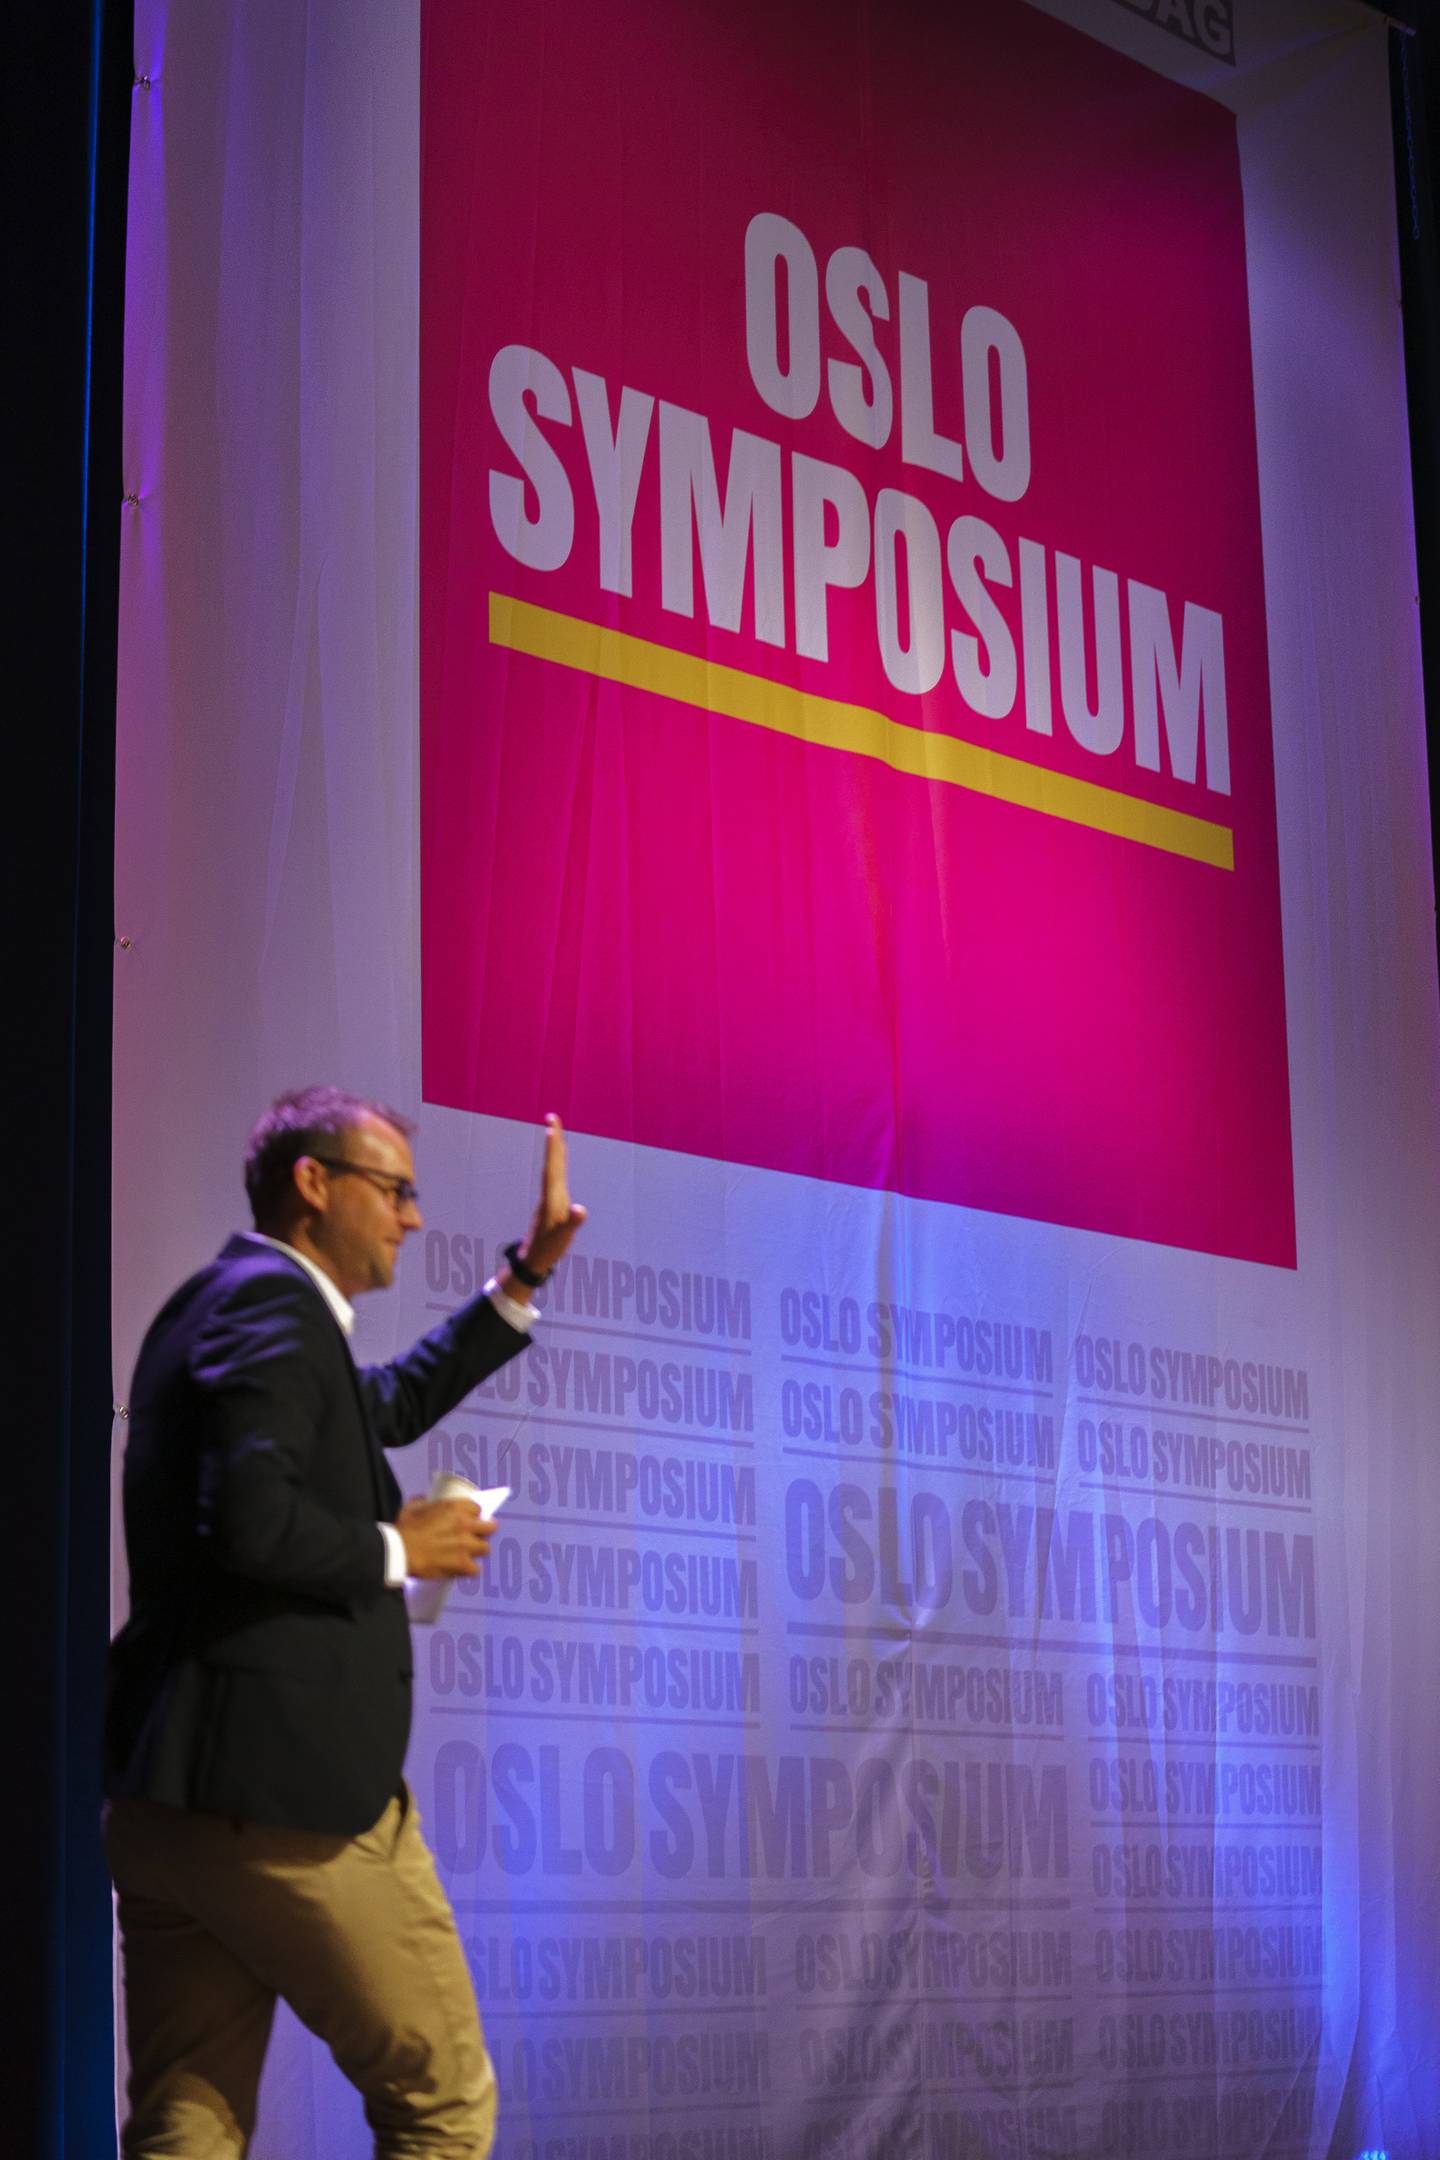 Oslo symposium 2021